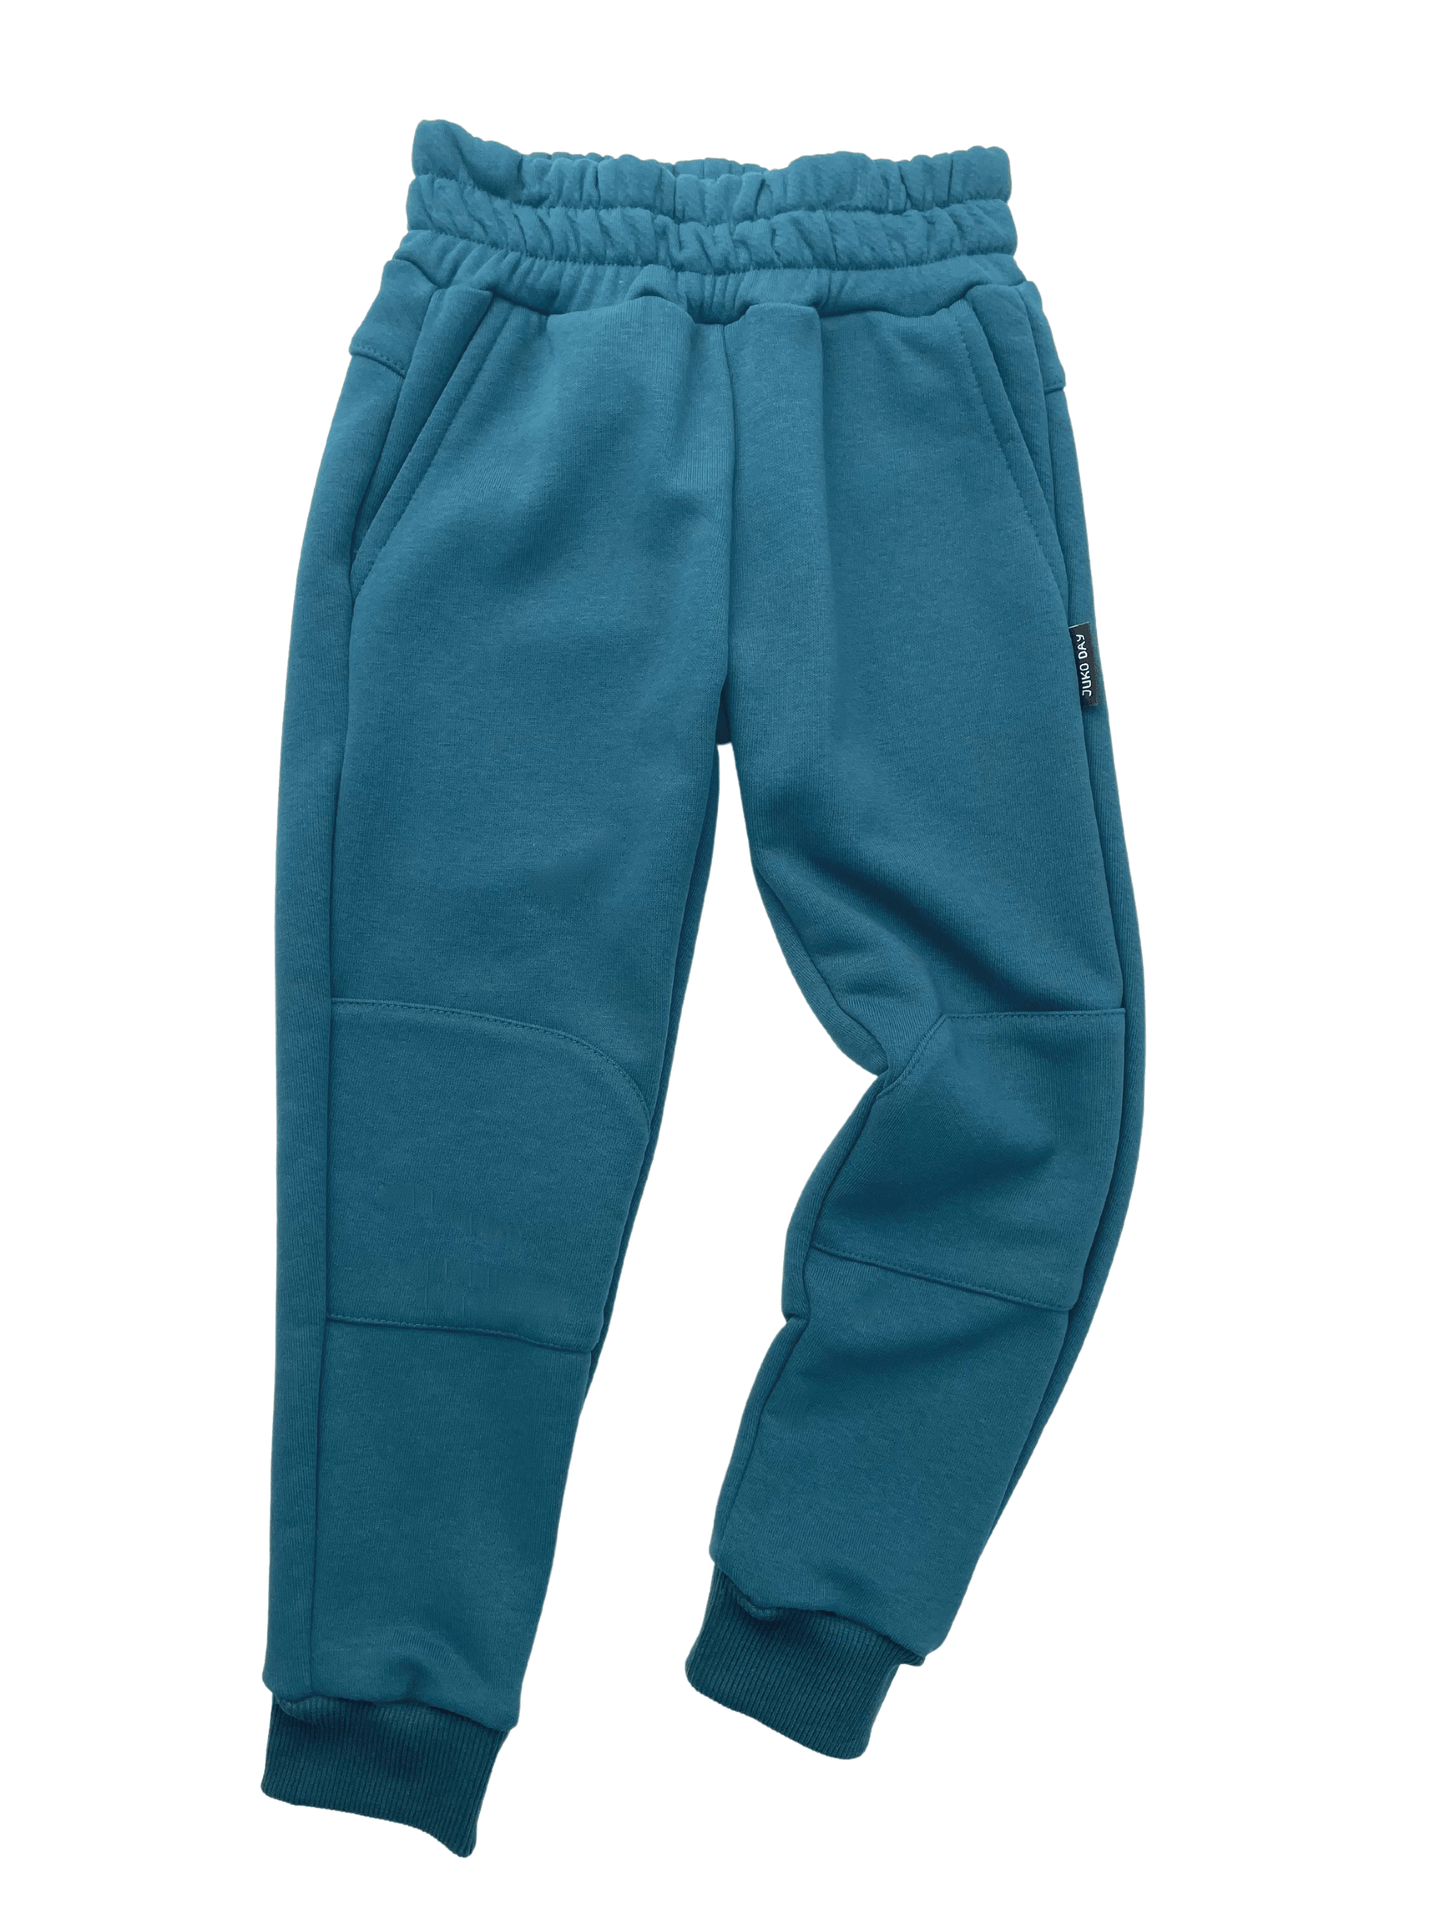 Children's trousers "Blue harbor"